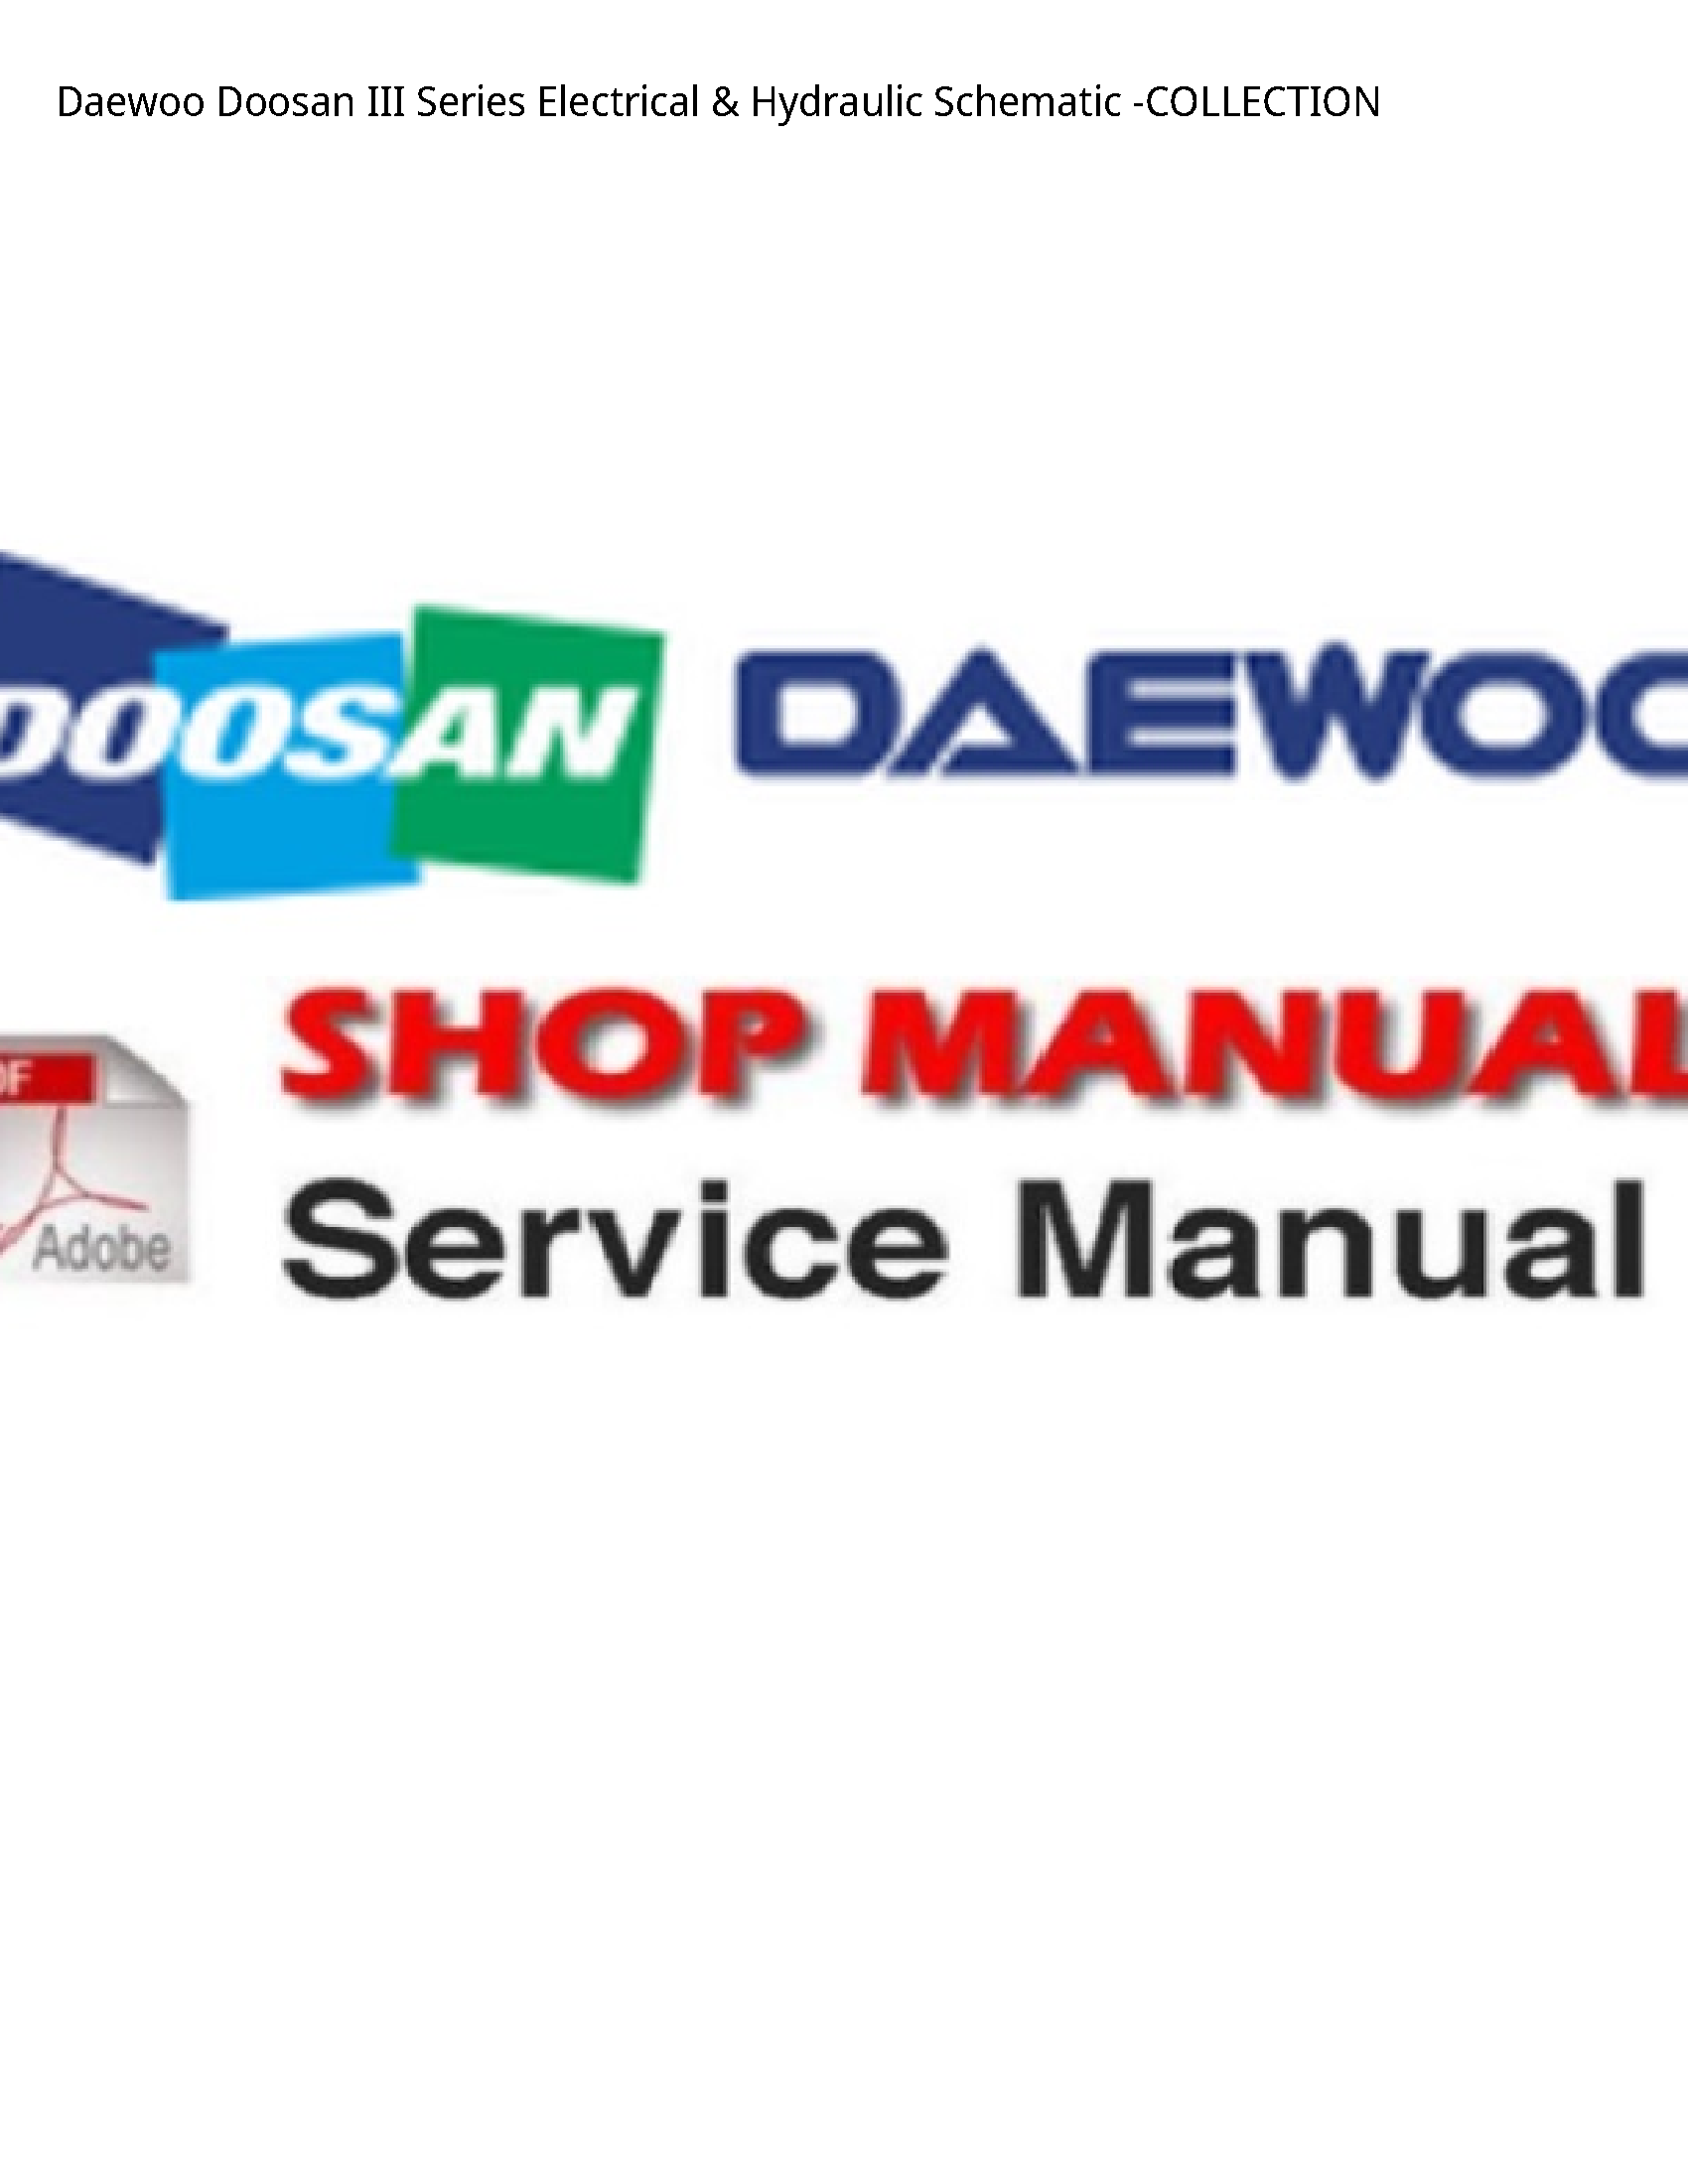 Daewoo Doosan III Series Electrical Hydraulic Schematic -COLLECTION manual